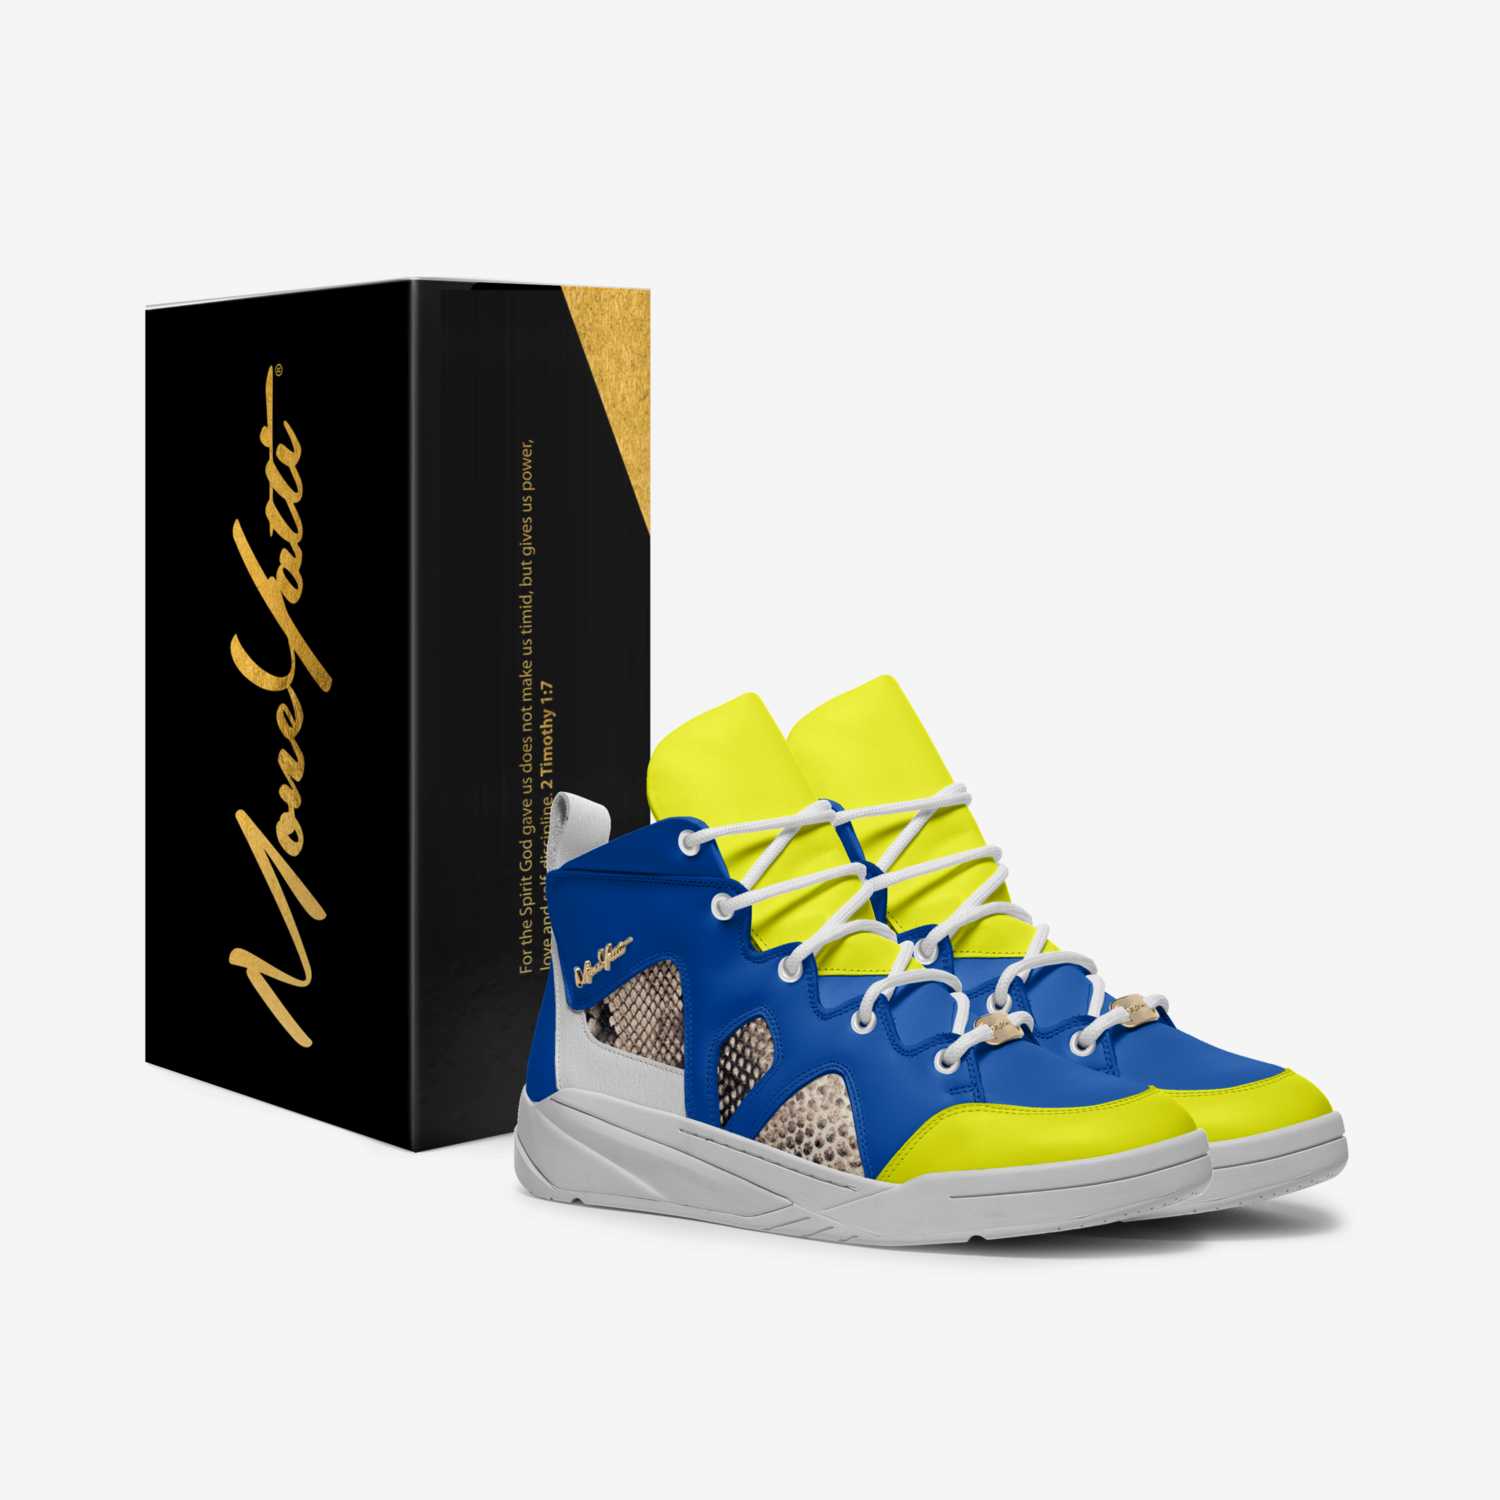 MONEYATTI TAKEOFF 002 custom made in Italy shoes by Moneyatti Brand | Box view